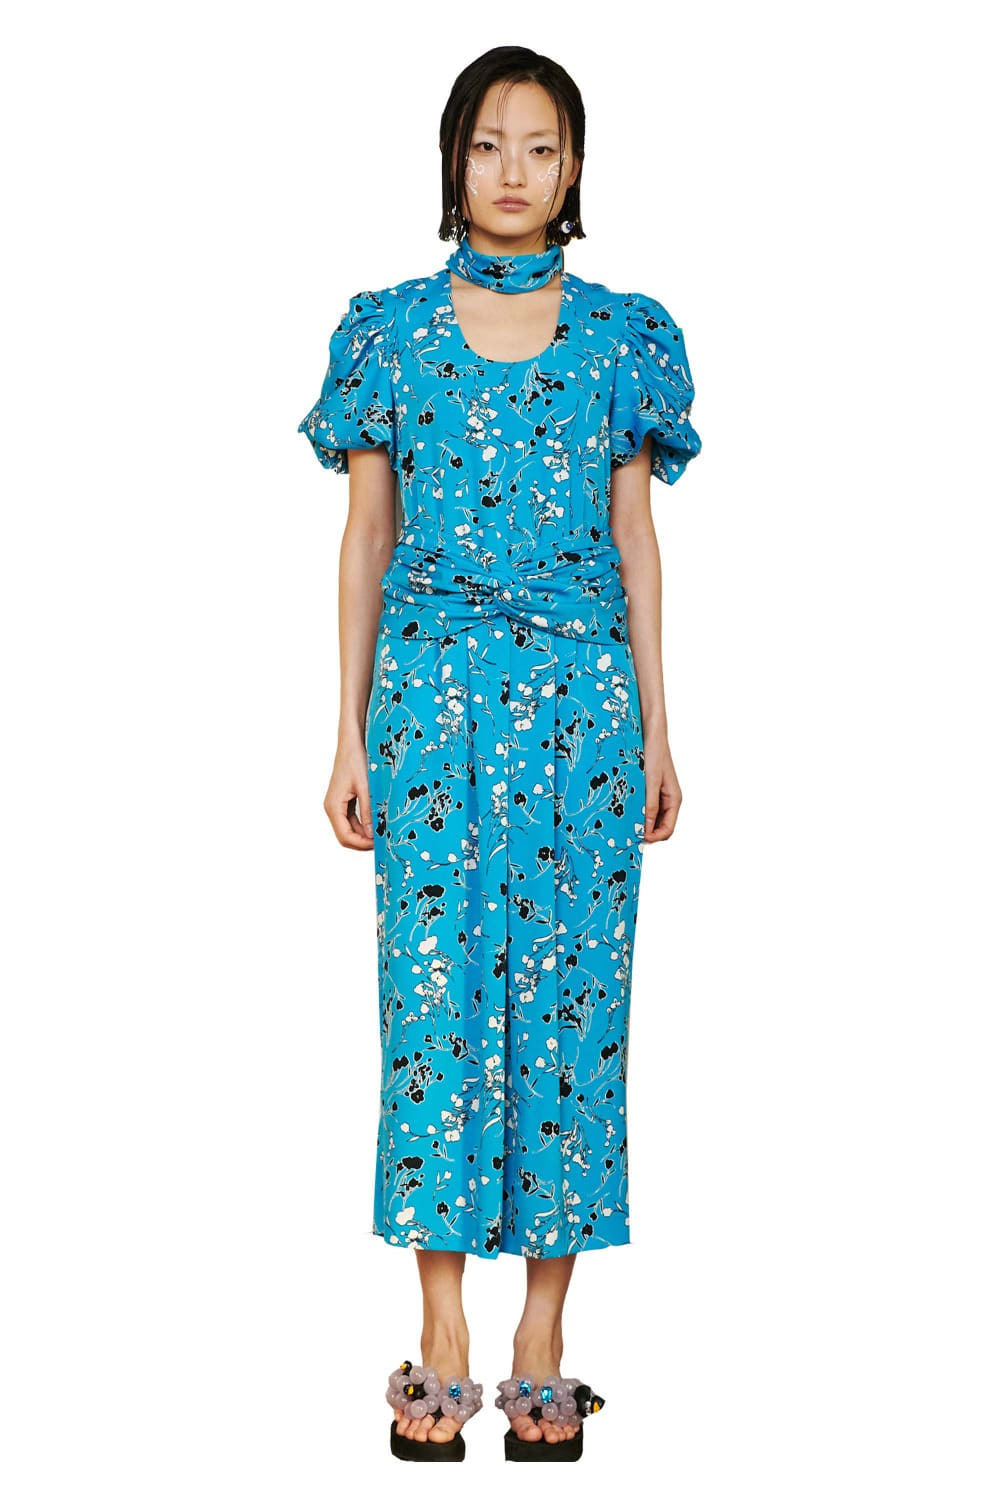 Fondest Flower Dress (Blue) - 3/5 부터 순차적으로 배송